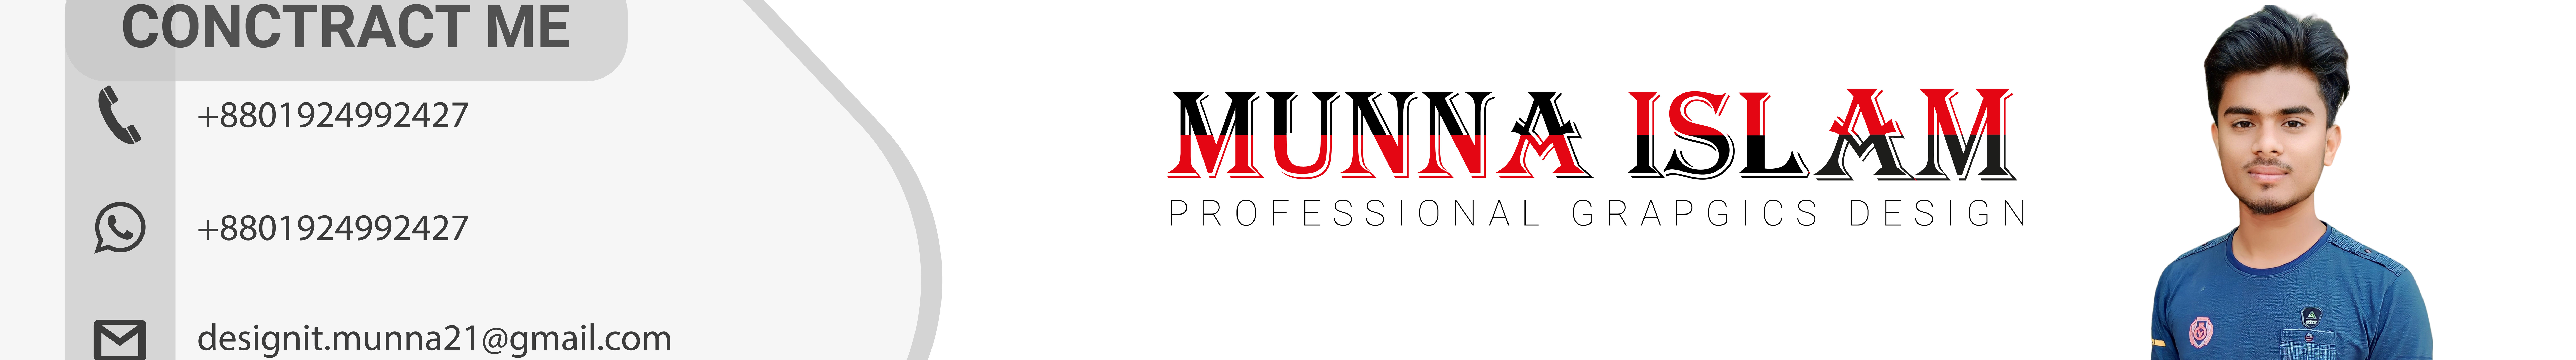 munna islam's profile banner